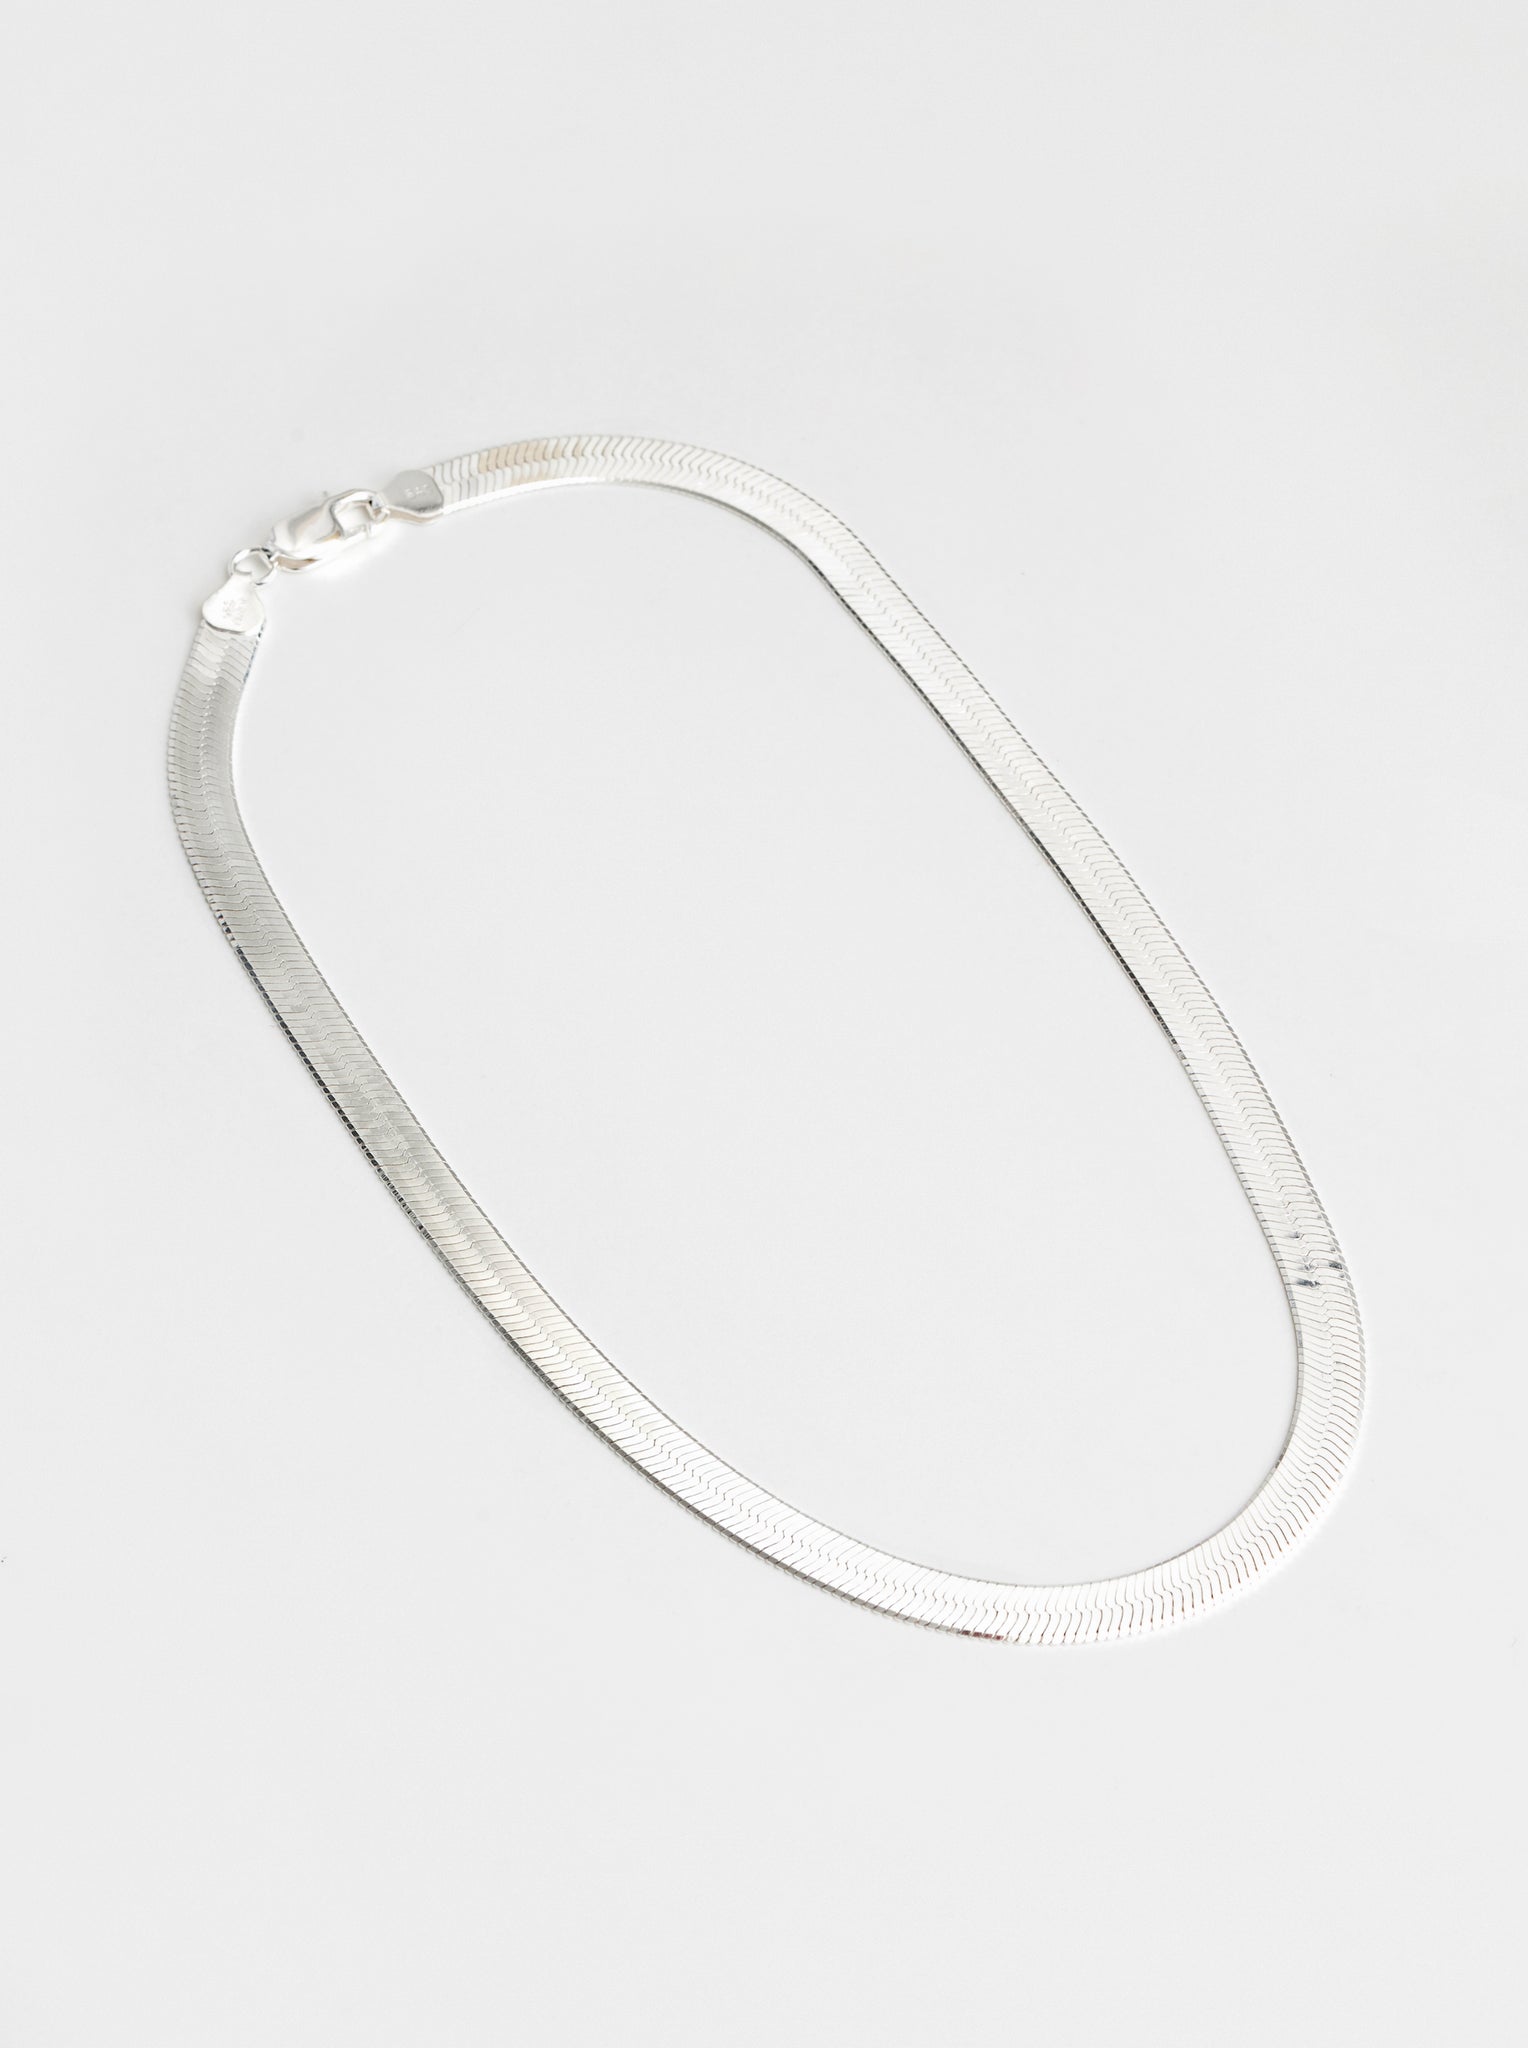 Herringbone Chain in Sterling Silver